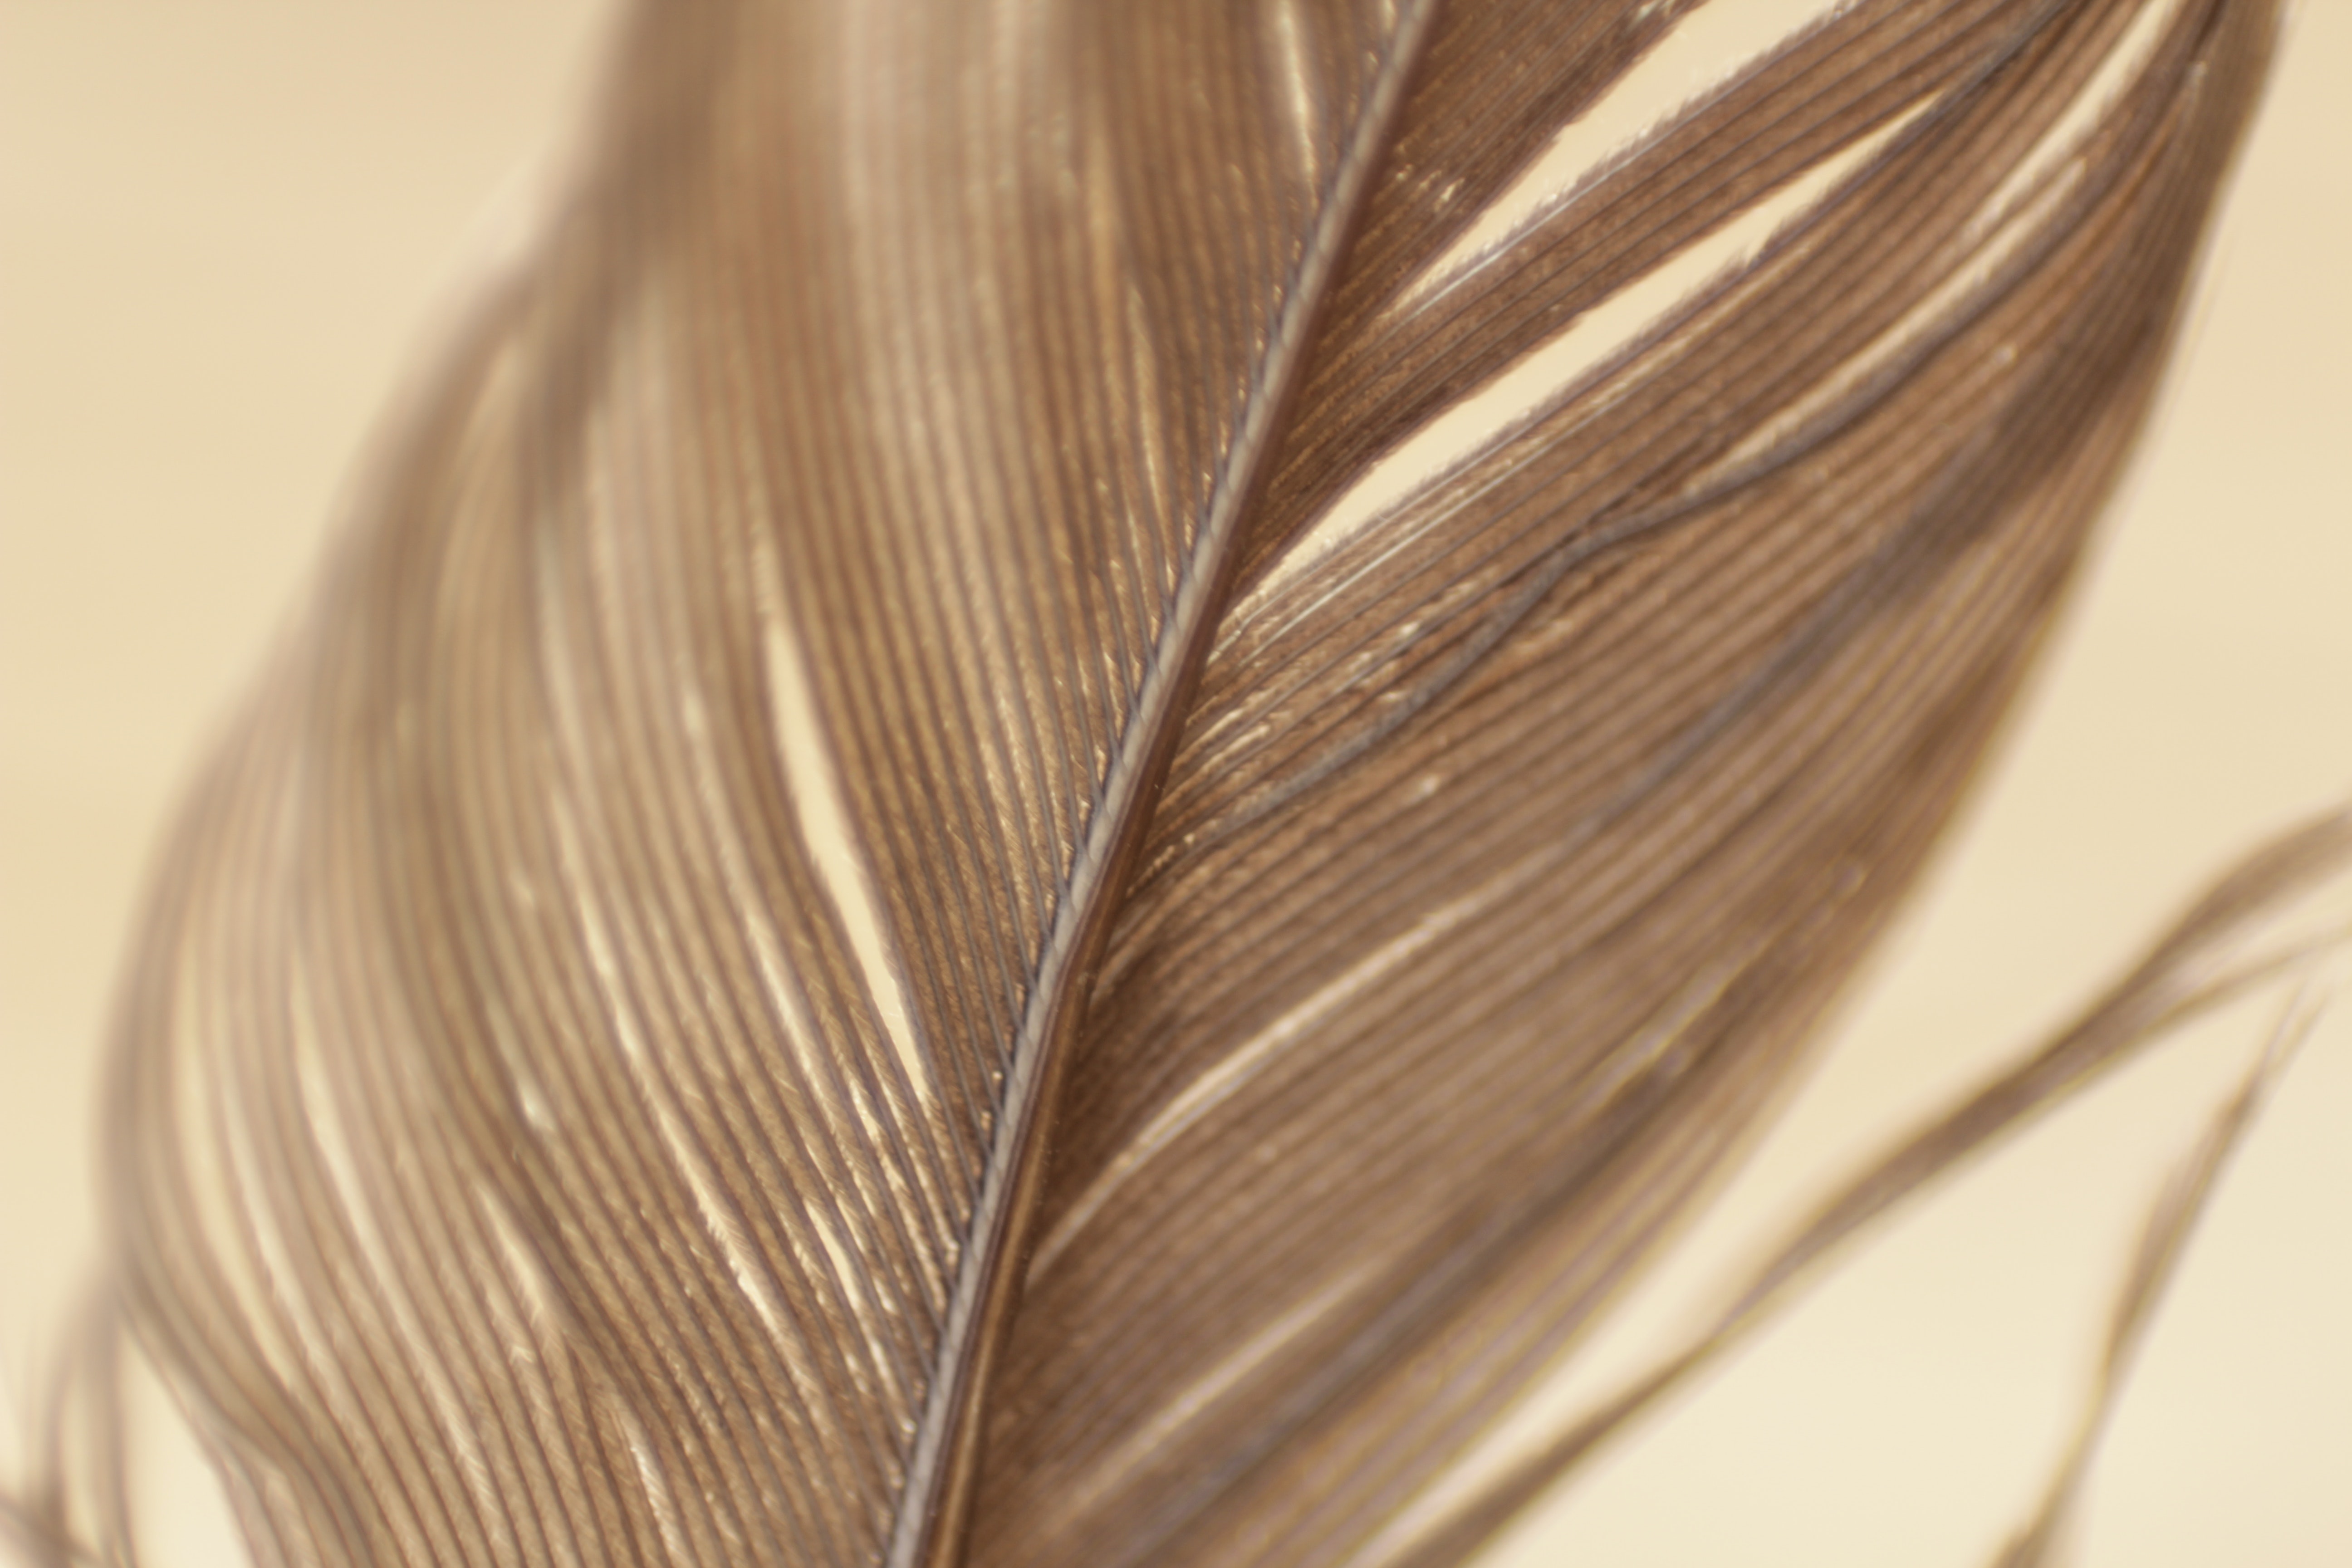 Feather closeup photo